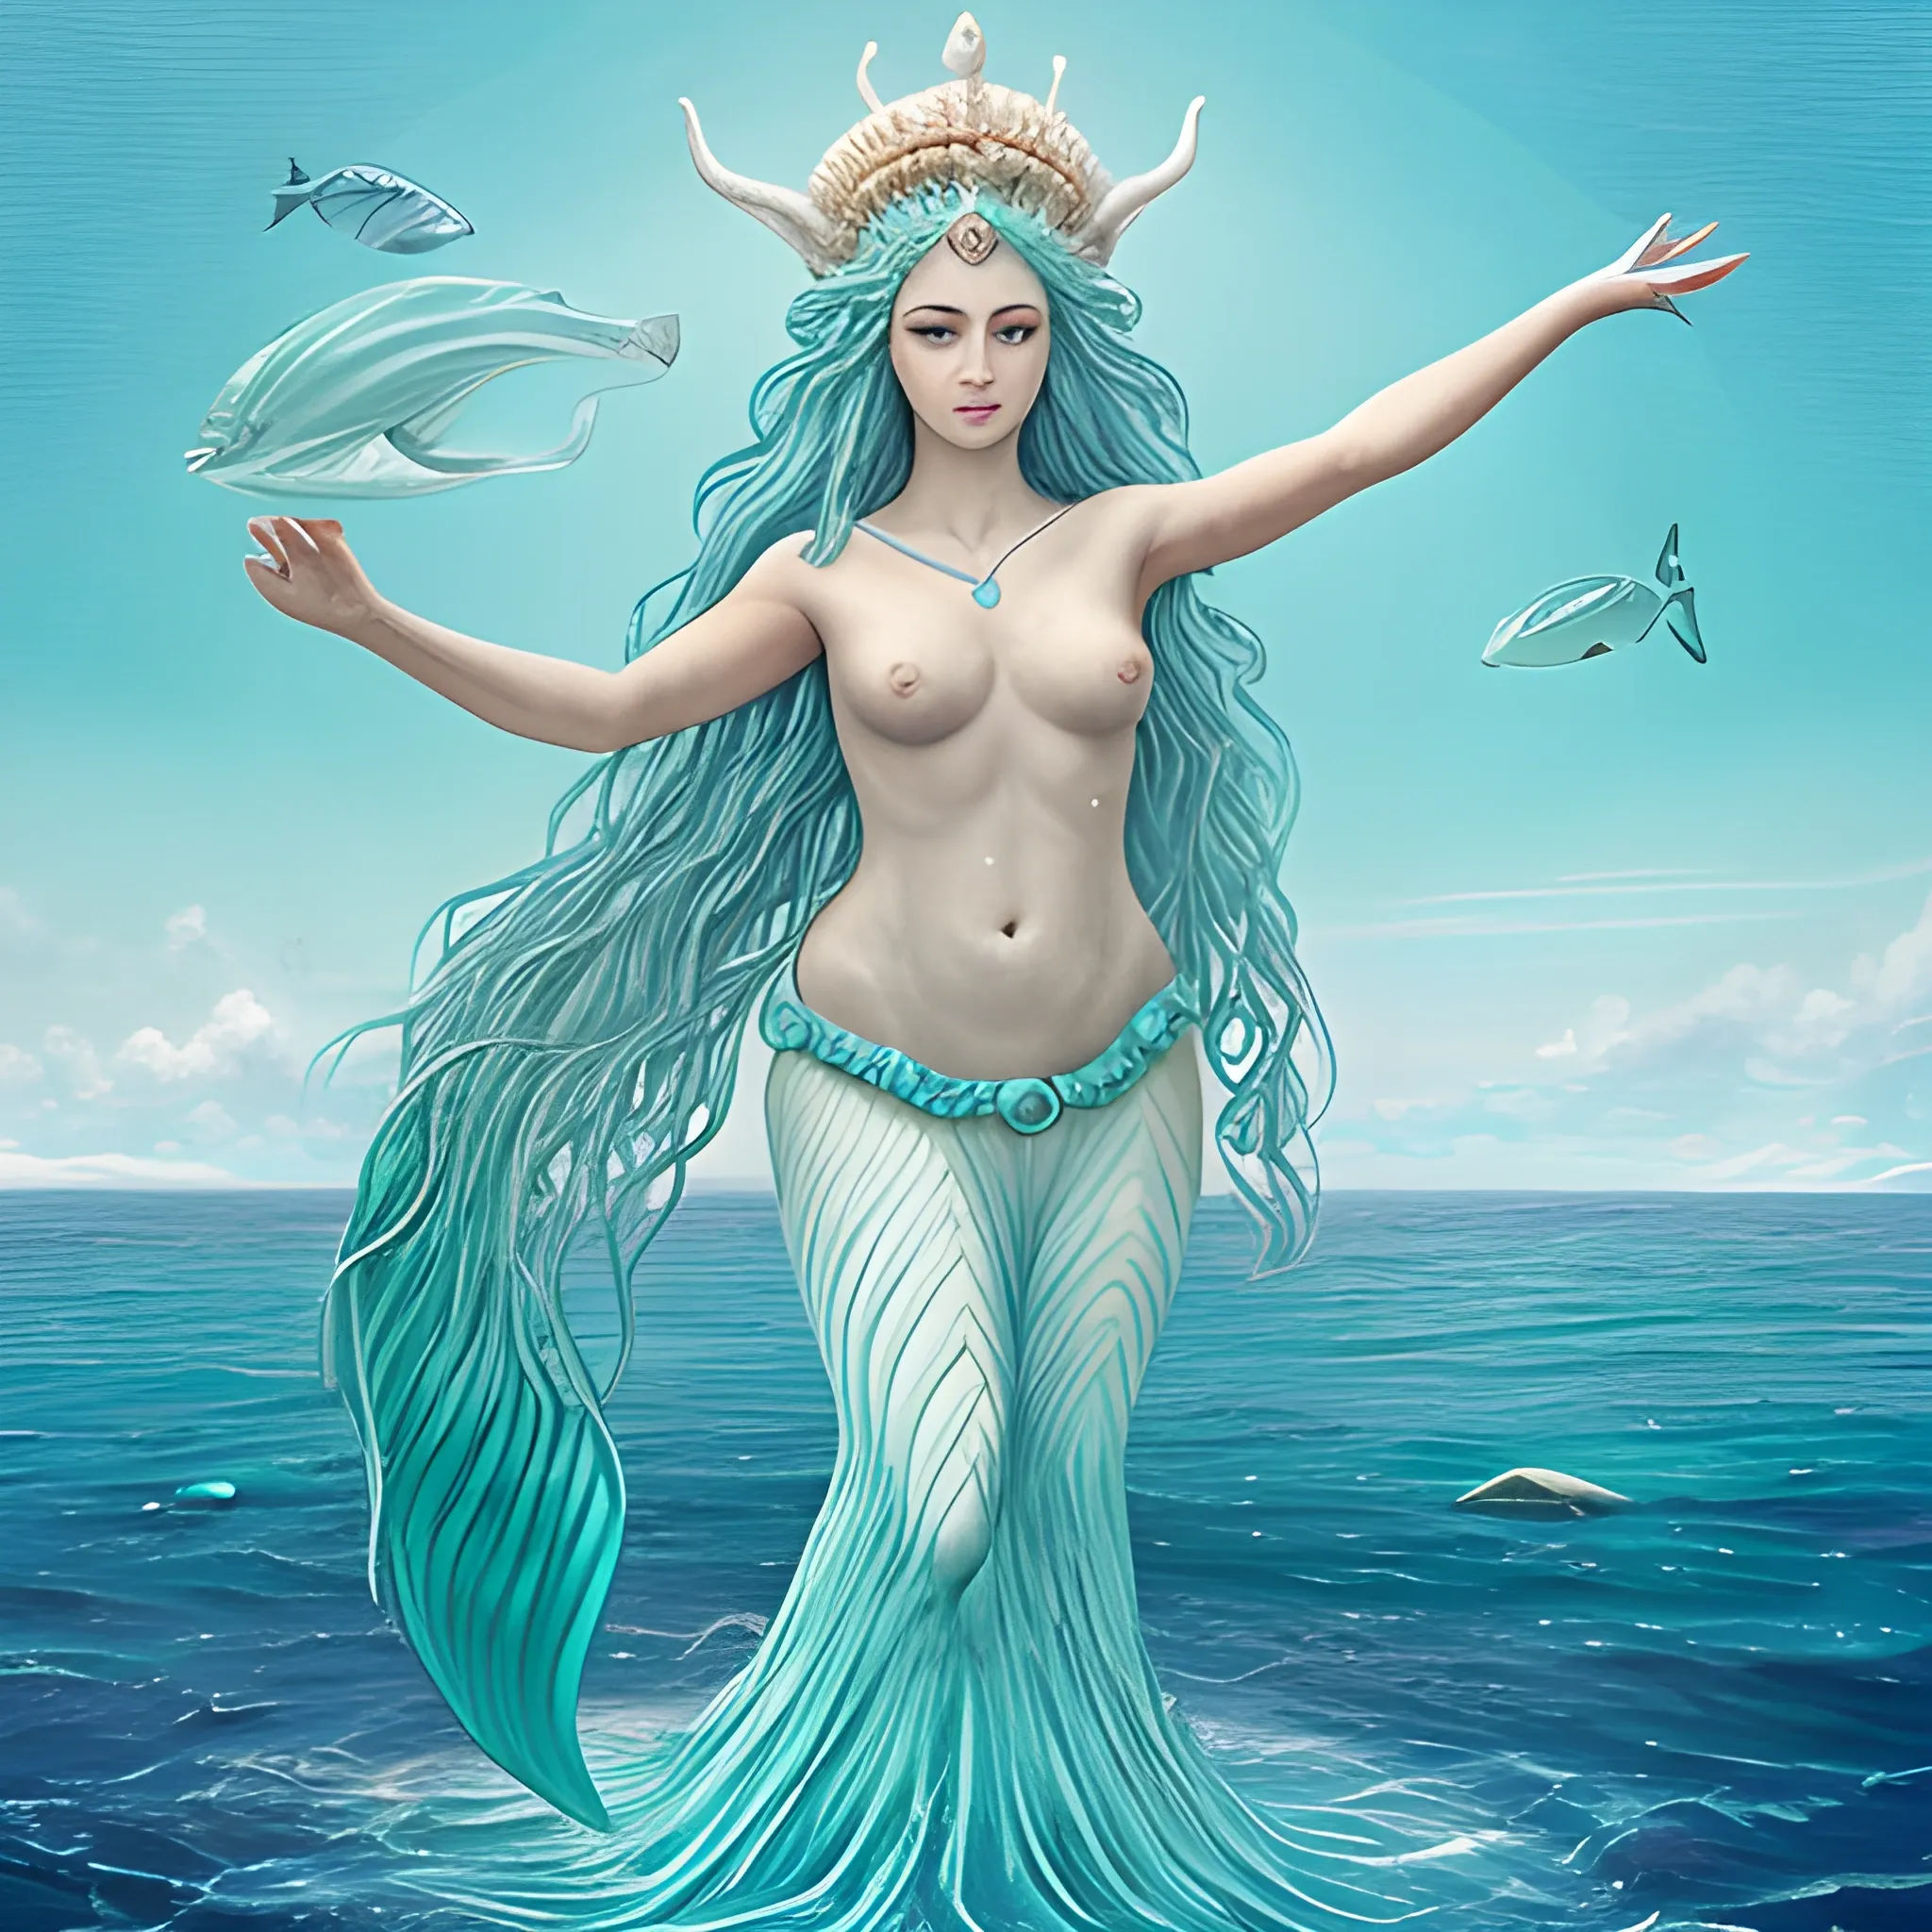 A sea goddess